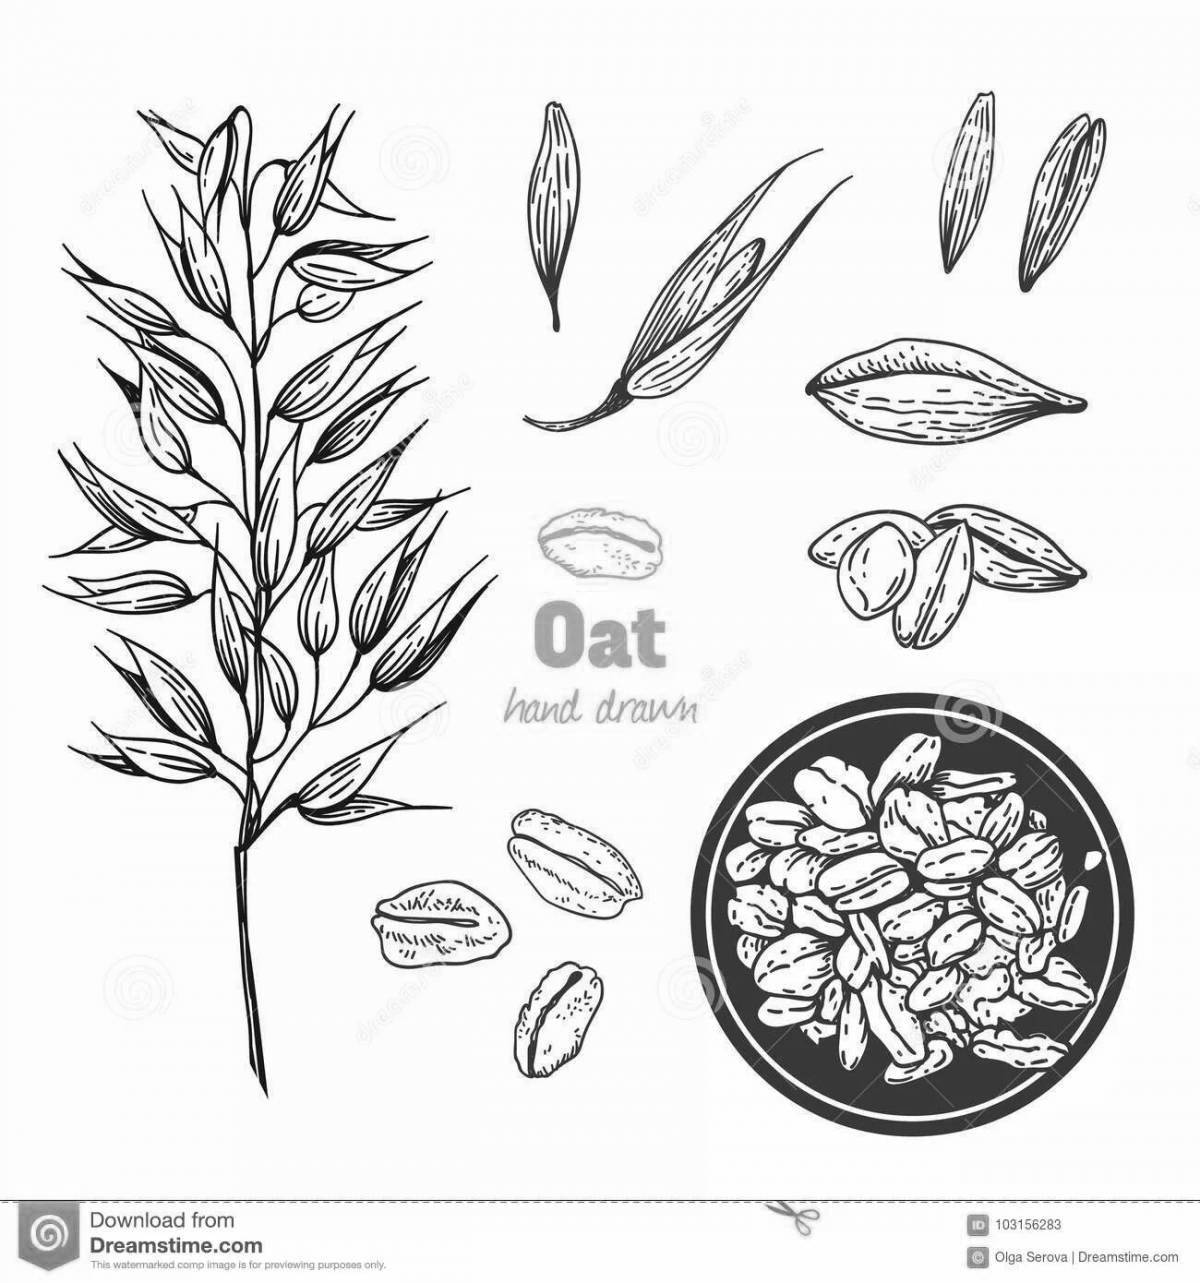 Joyful oats coloring book for kids